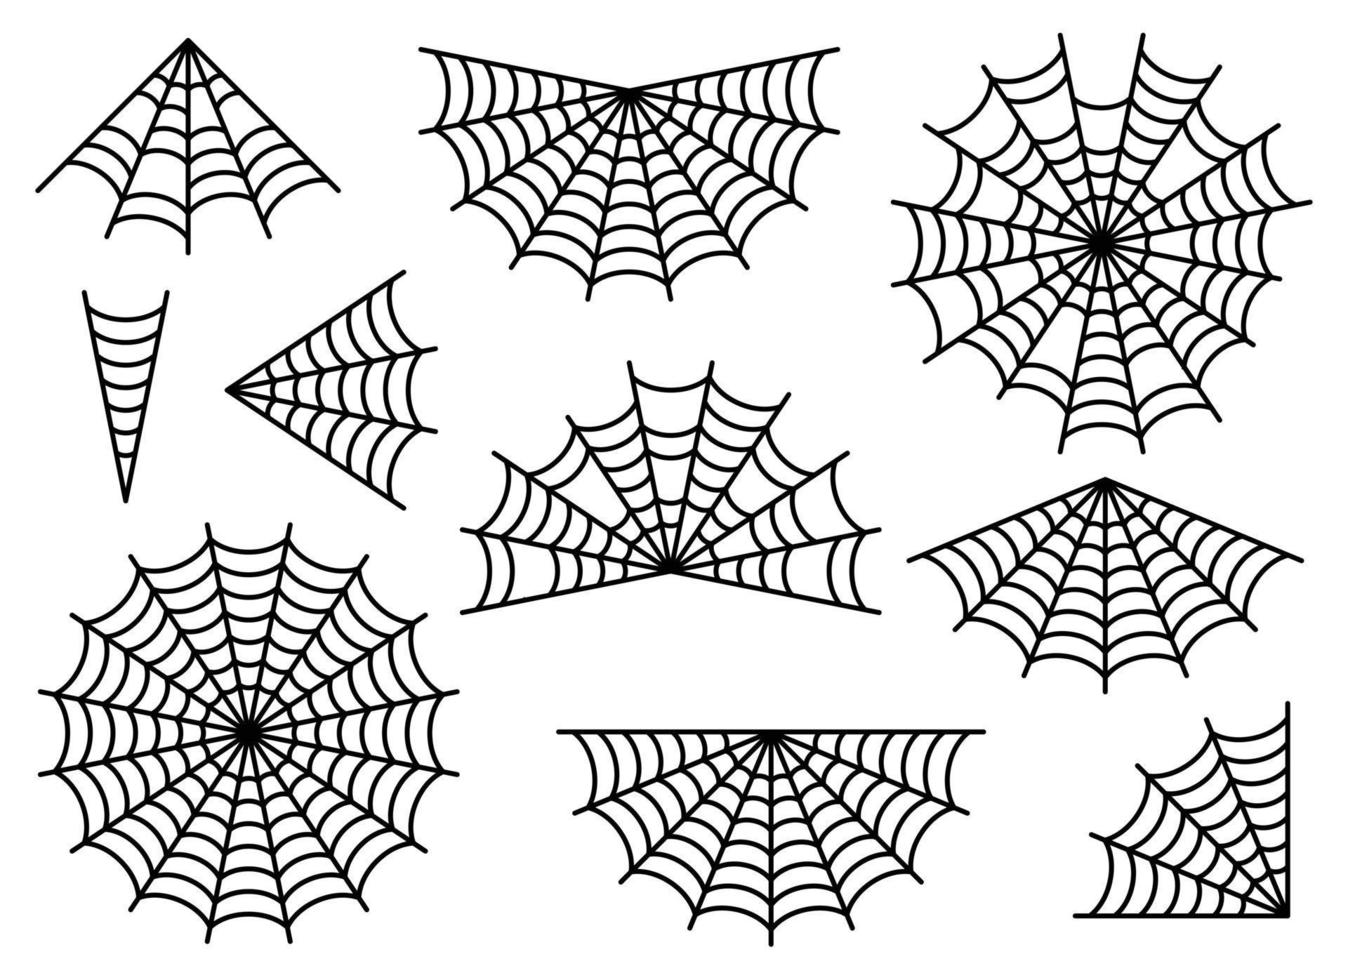 Spider web icon set isolated on white. Black halloween cobweb vector illustration